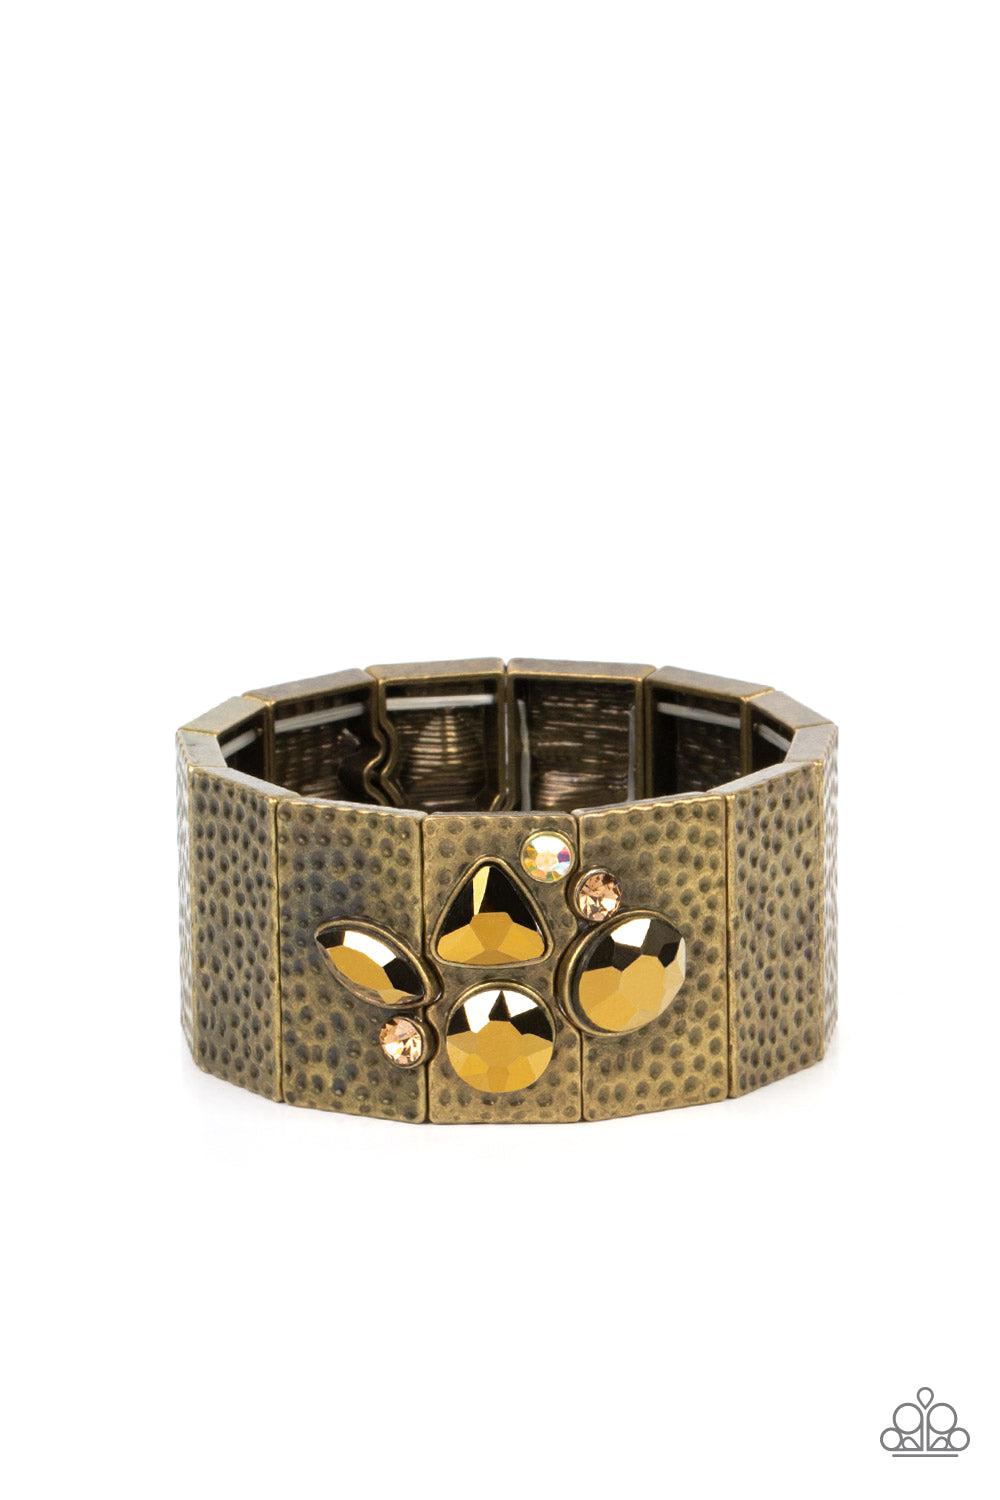 Flickering Fortune Brass &amp; Rhinestone Bracelet - Paparazzi Accessories- lightbox - CarasShop.com - $5 Jewelry by Cara Jewels